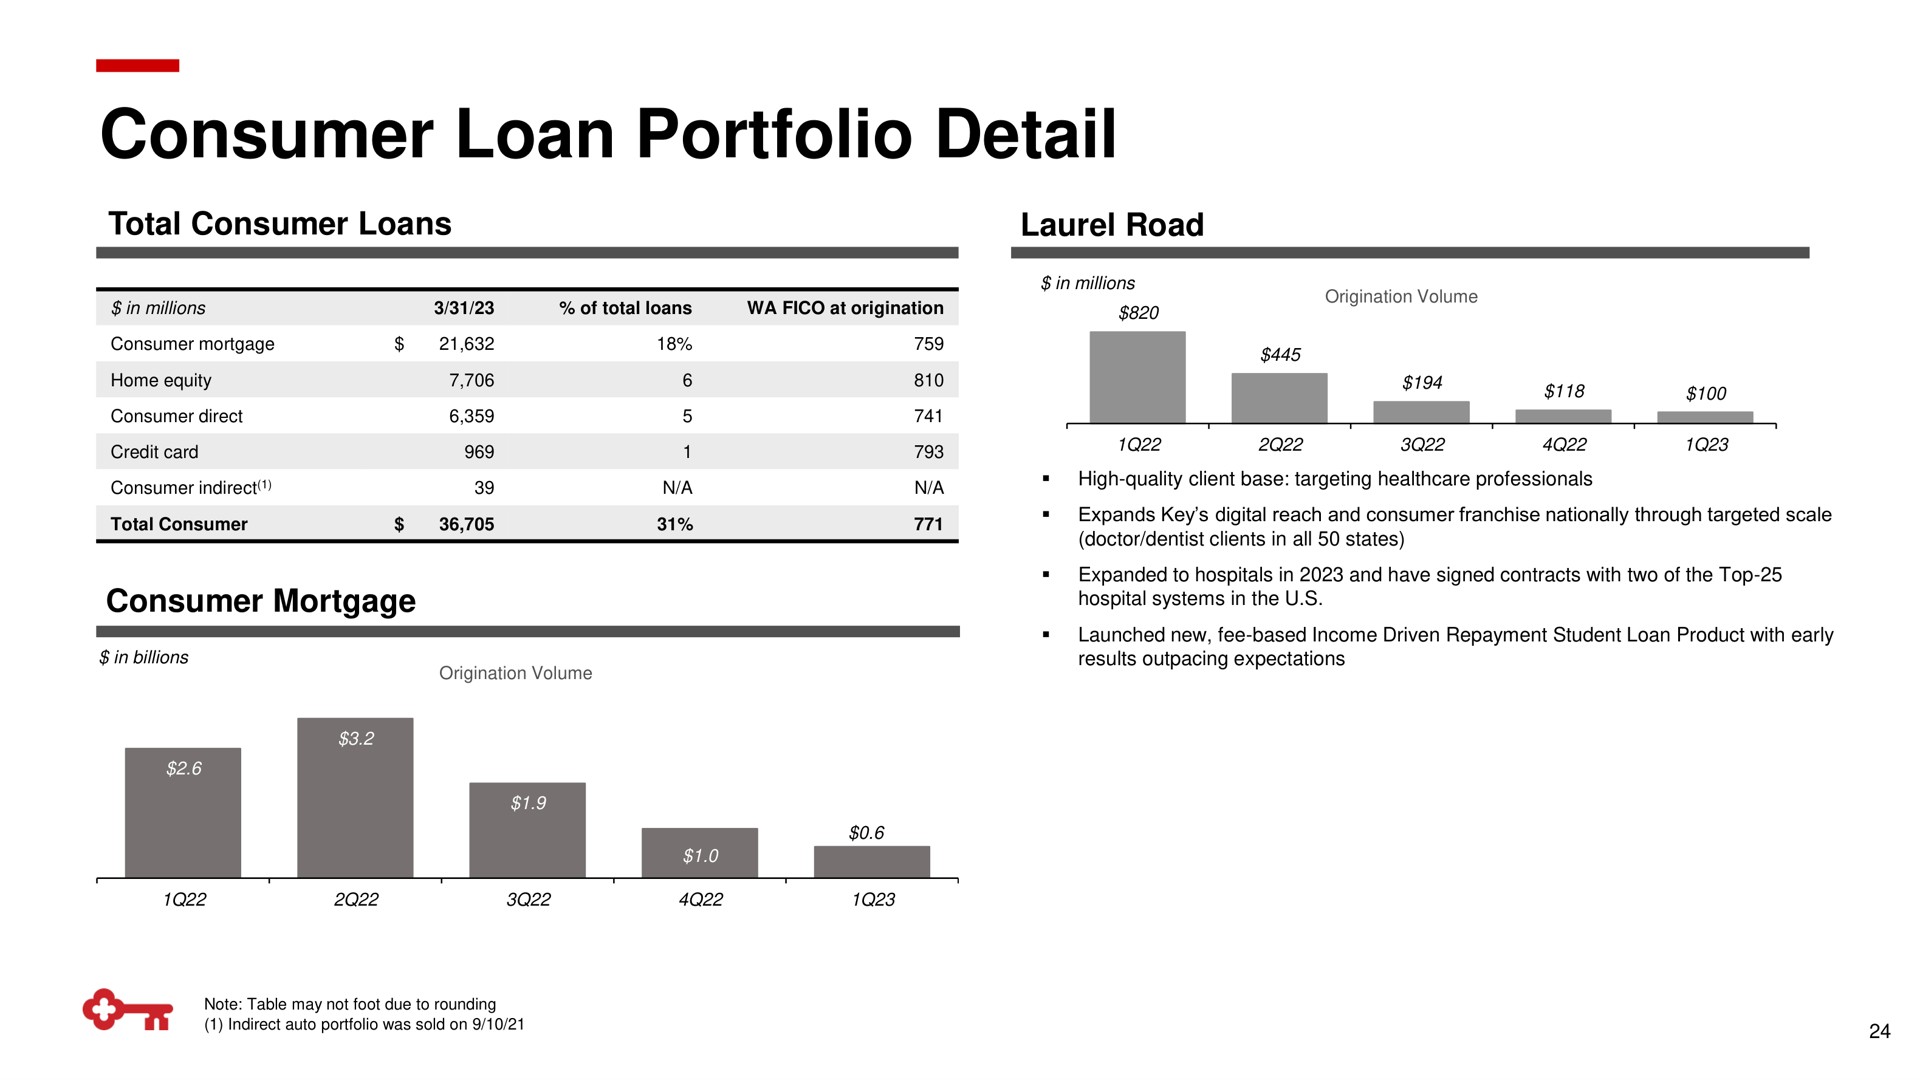 consumer loan portfolio detail | KeyCorp